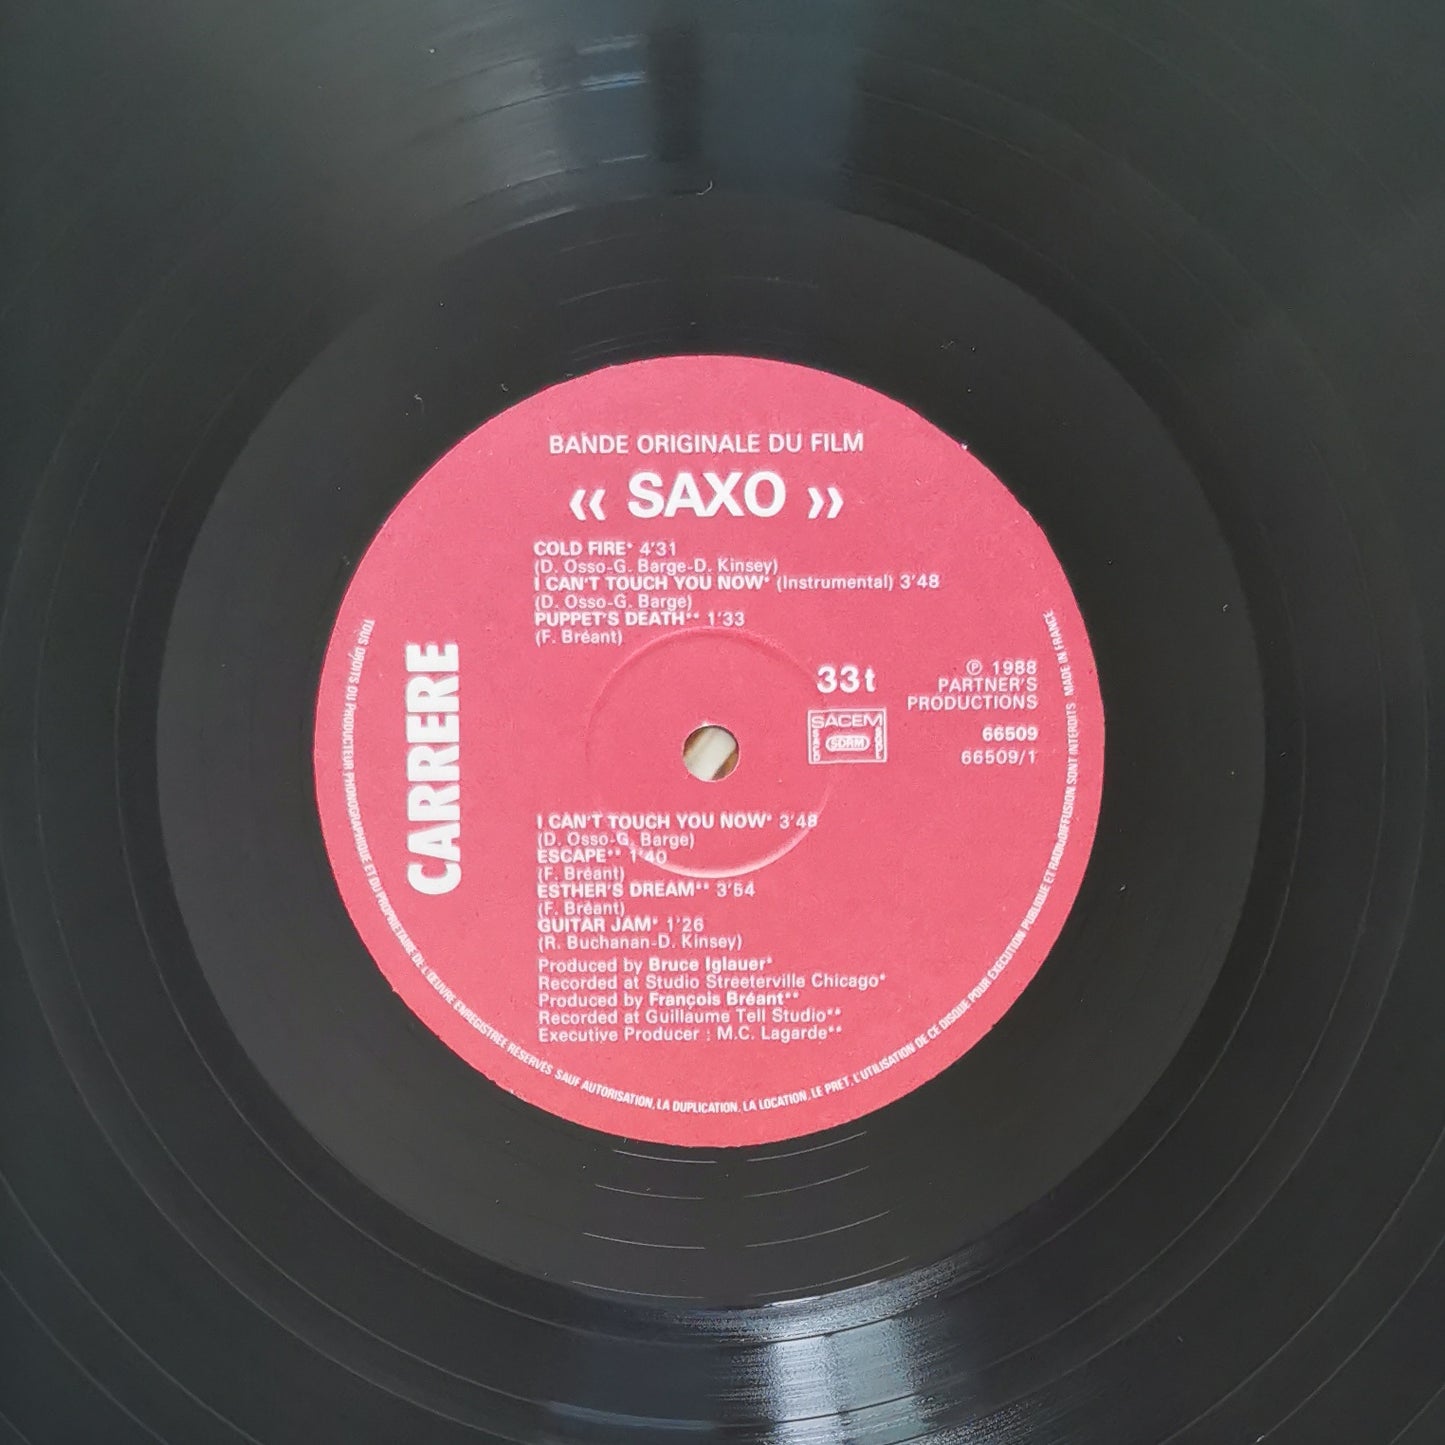 SAXO - Bande Originale Du Film "Saxo"